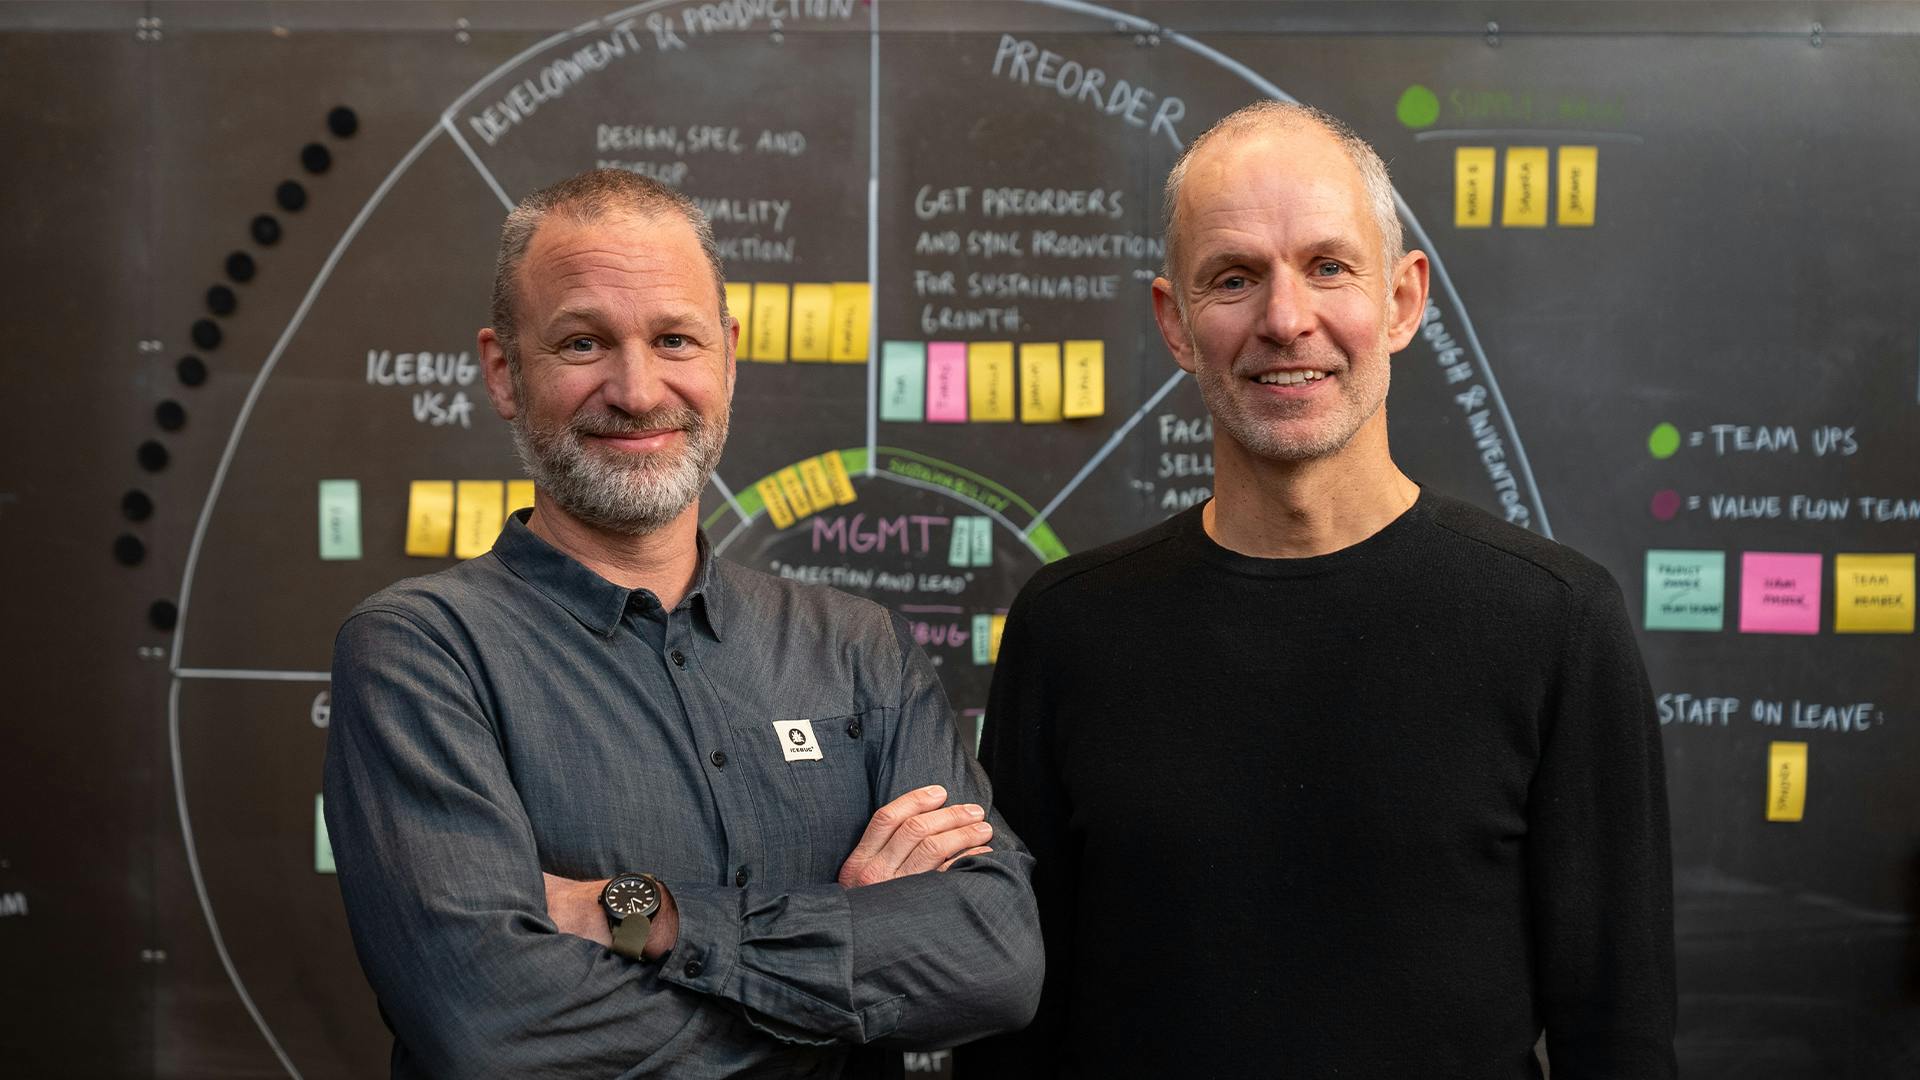 Image of Icebugs two CEO, David and Tom